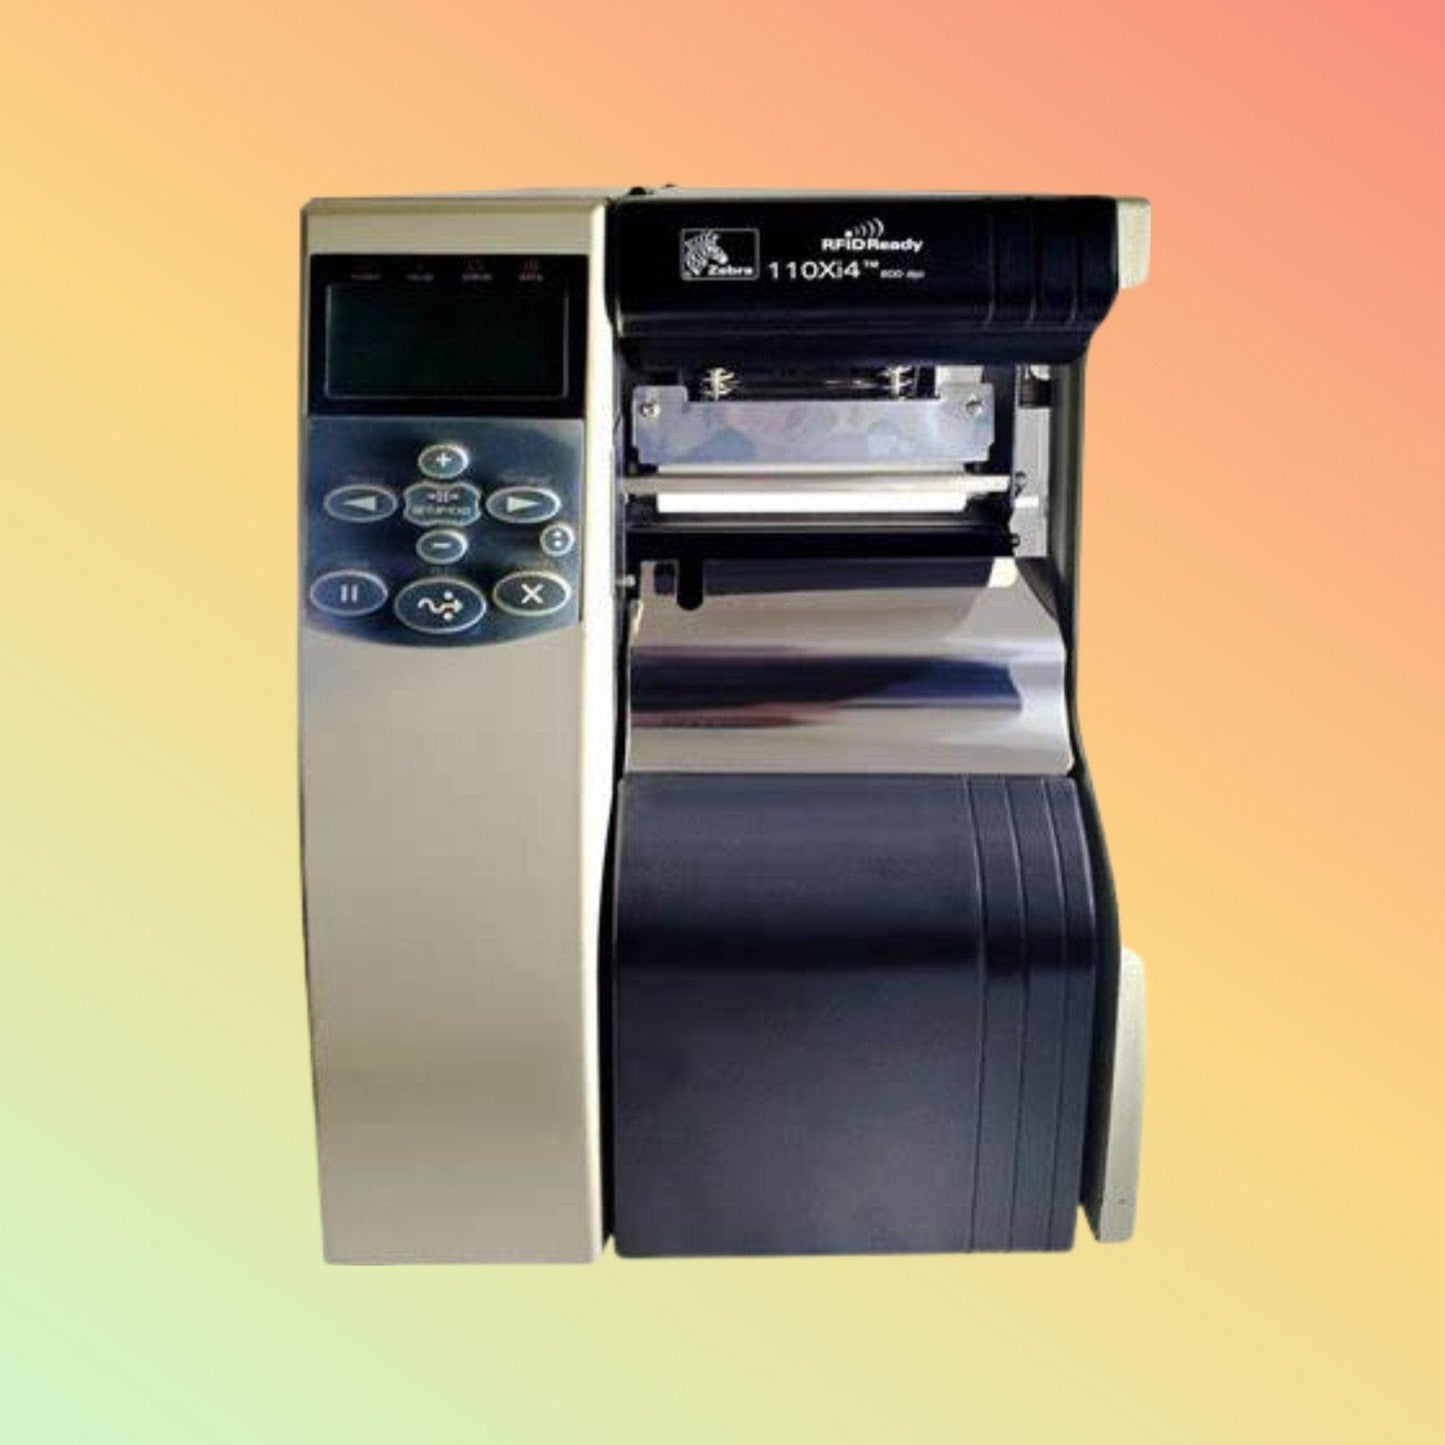 Barcode Printer - Zebra 110Xi4 - Neotech